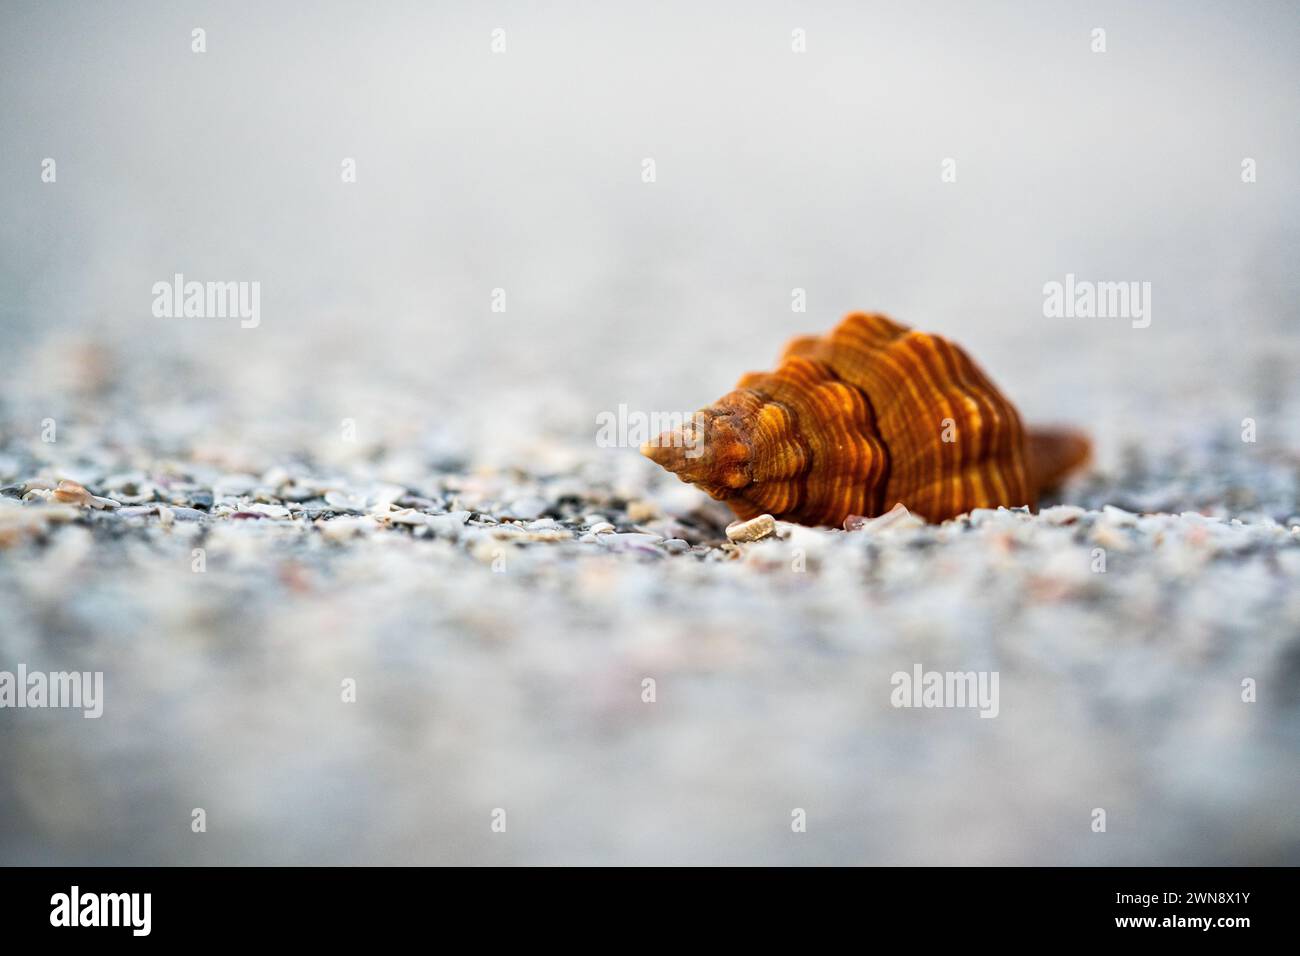 Orange seashell on beach with shallow depth of field Stock Photo